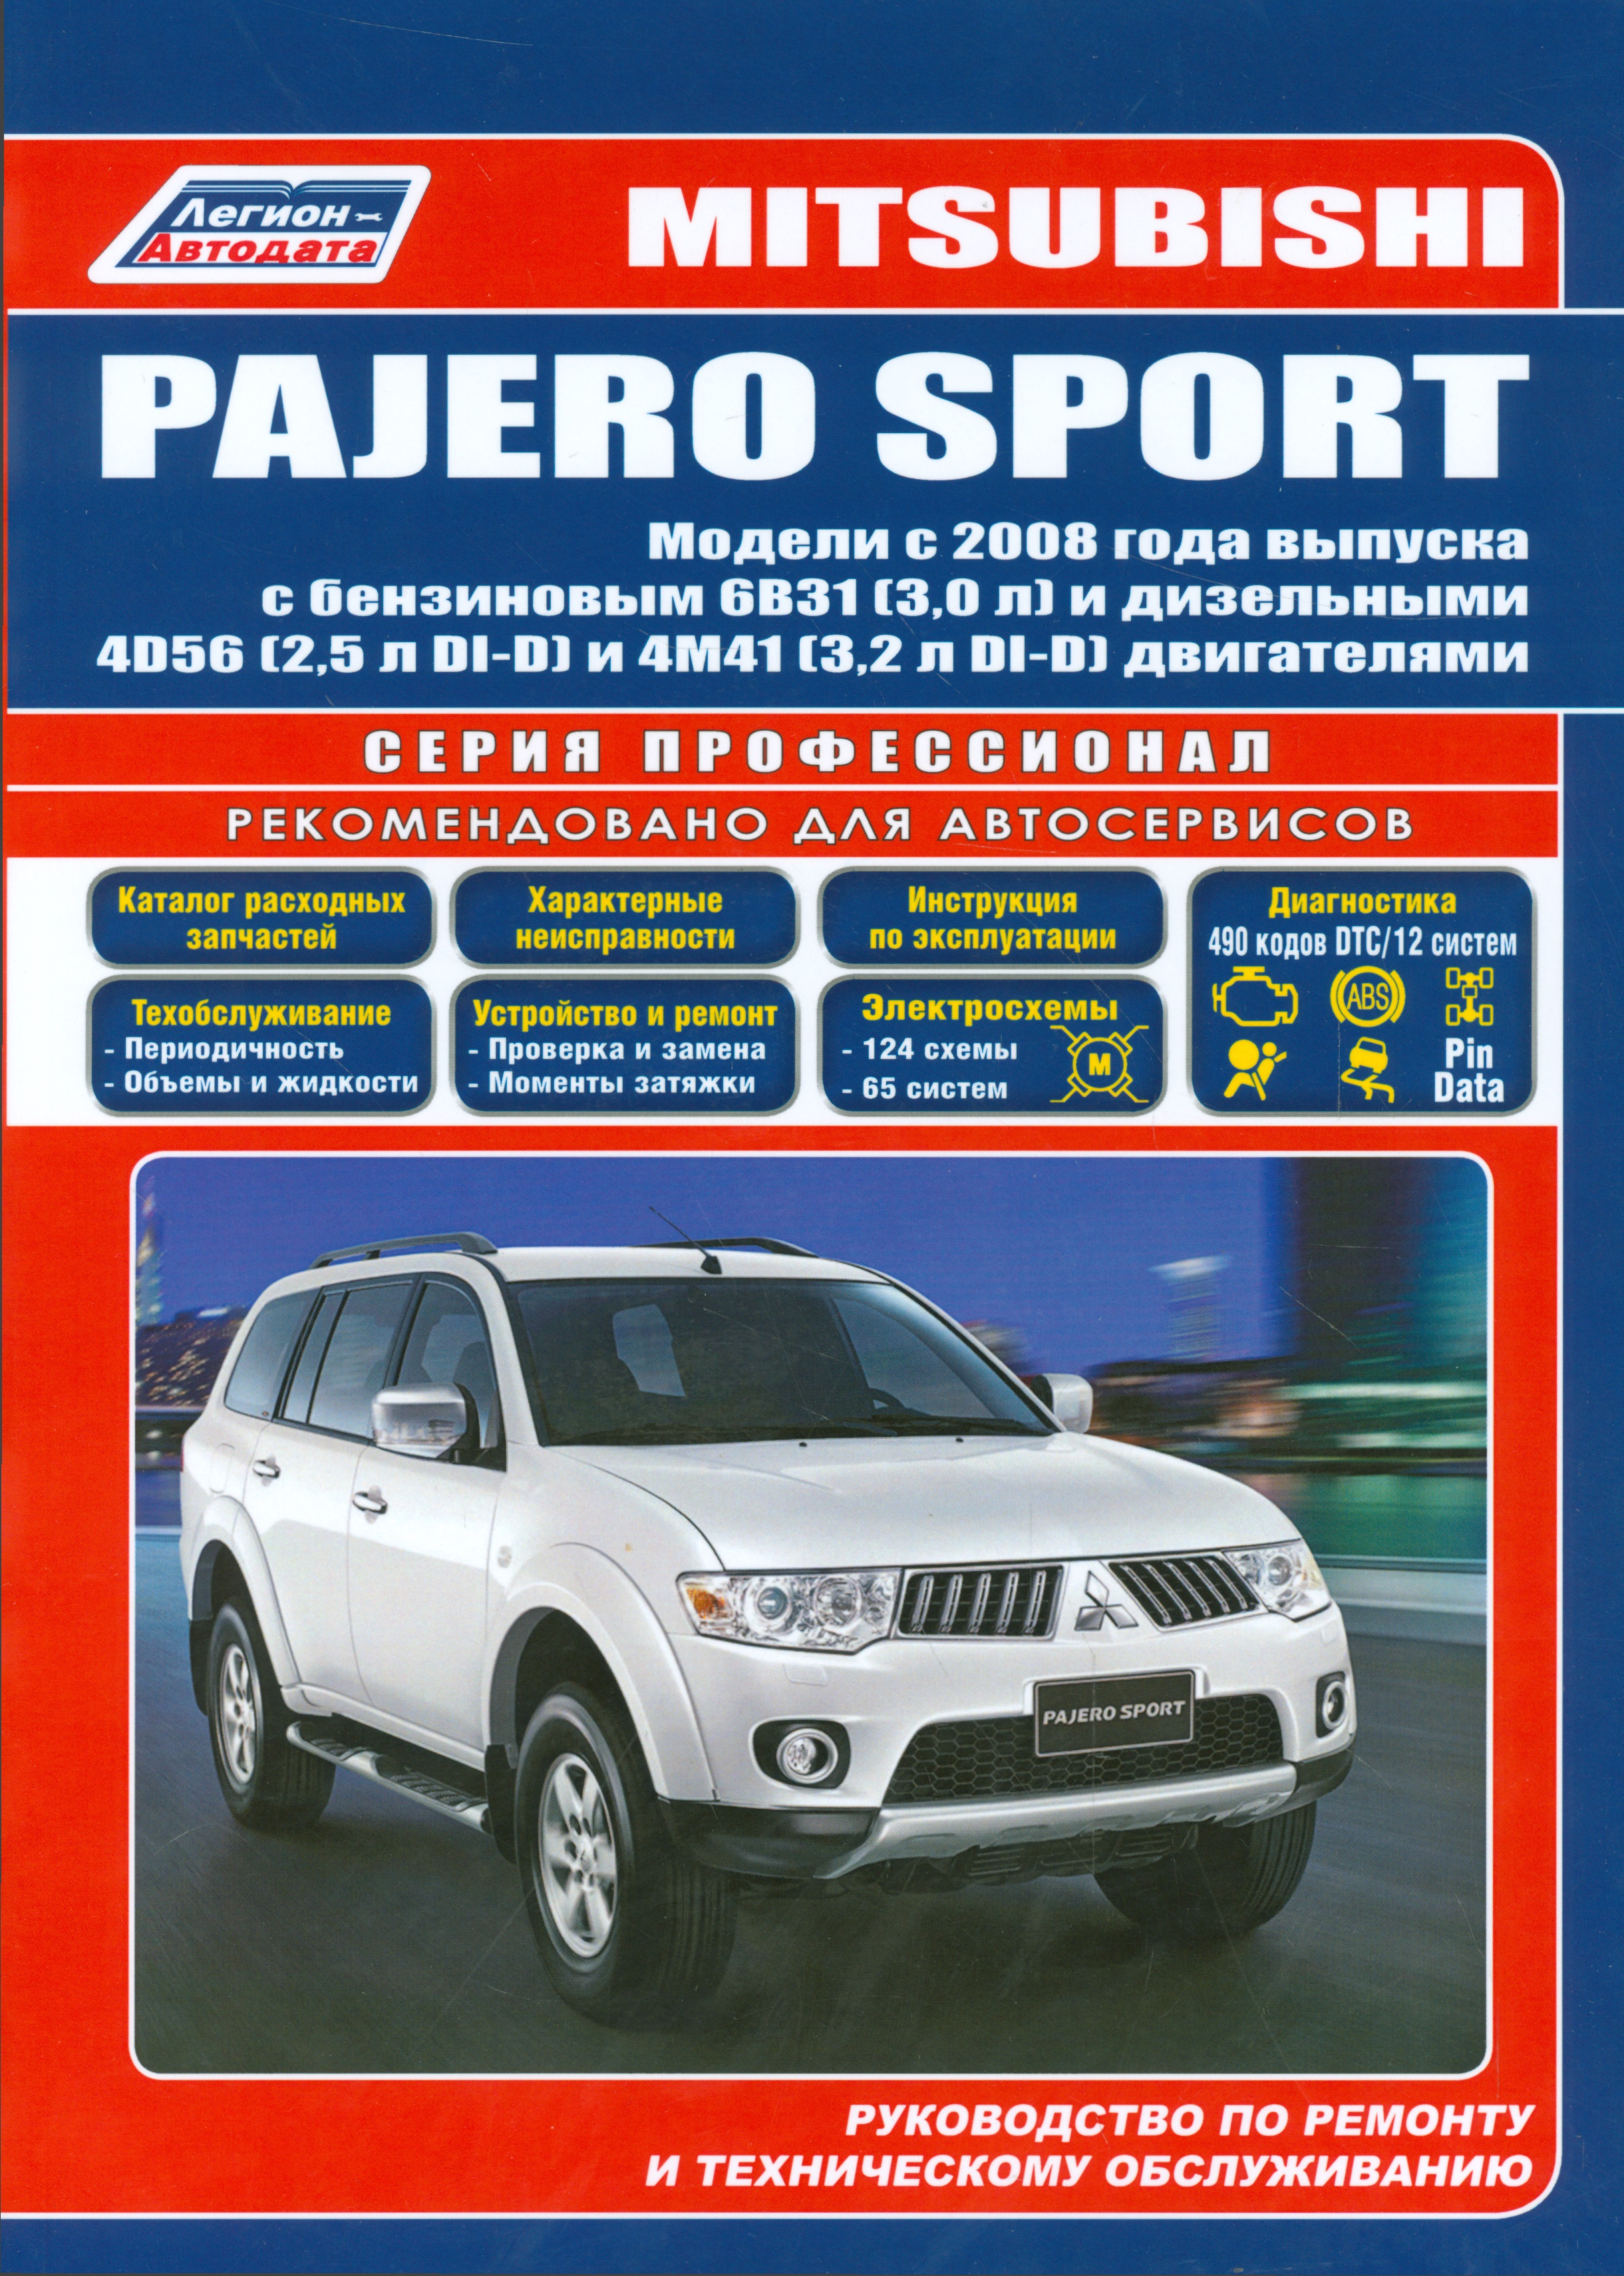 Mitsubishi Pajero Sport Мод. с 2008 г. вып. с бенз. 6В31 (3,0 л.) и диз. 4D56 (мПрофессионал) subaru forester мод вып 2008 2011 гг с бенз двигат dohc 2 0 л м